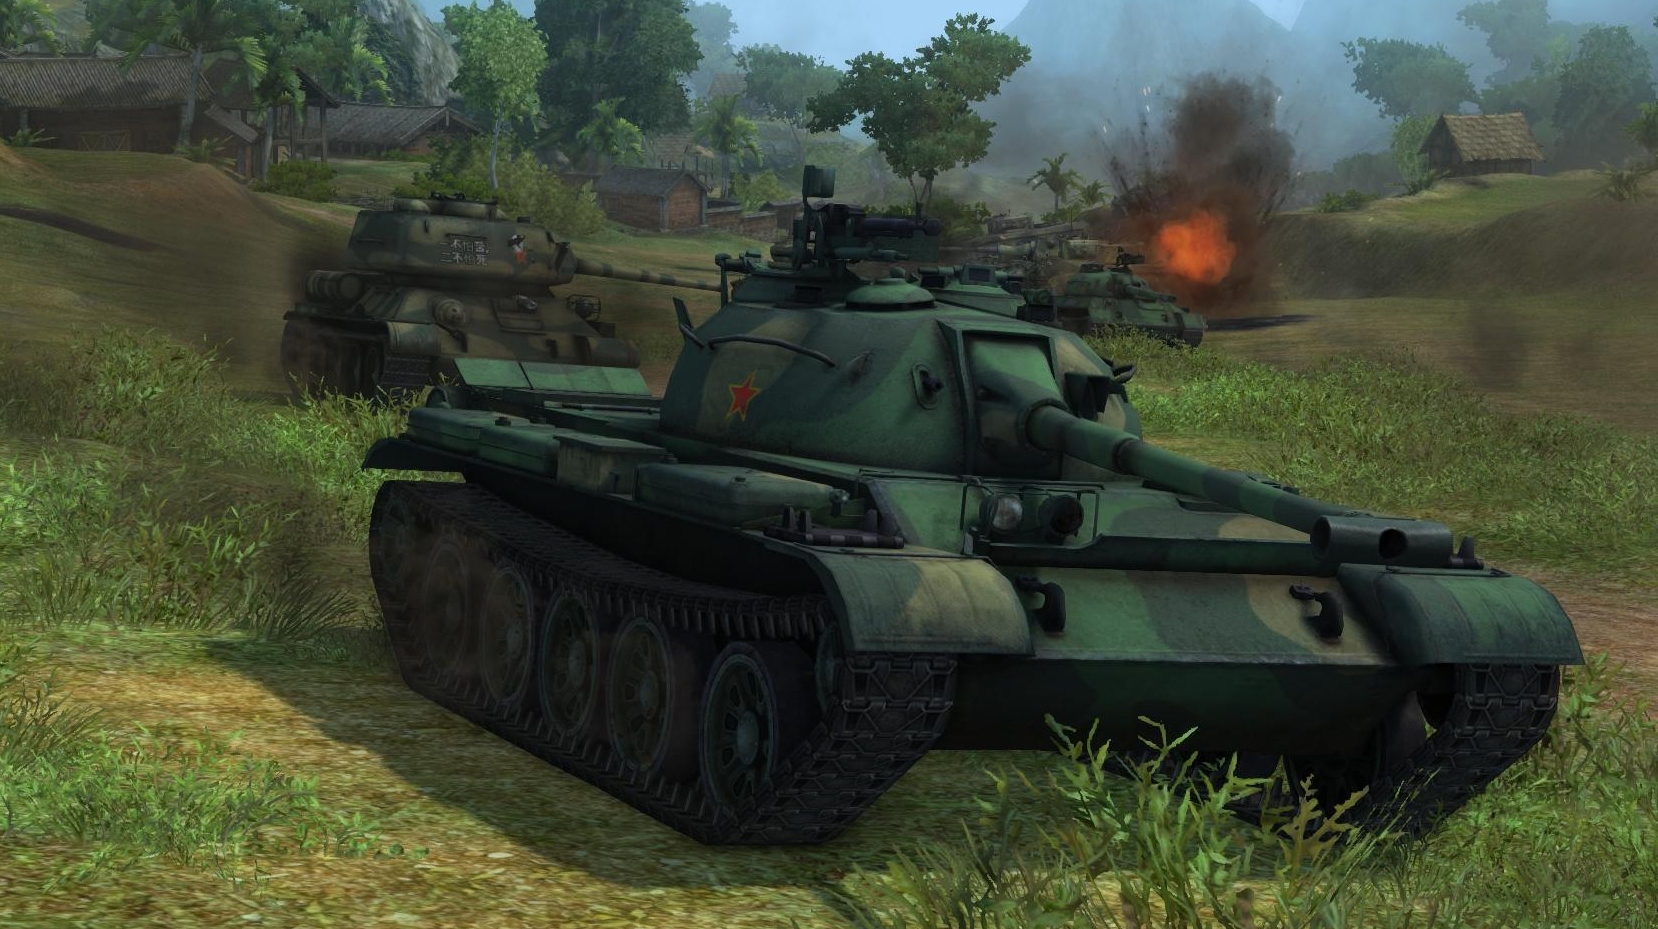 Картинки про игру танки